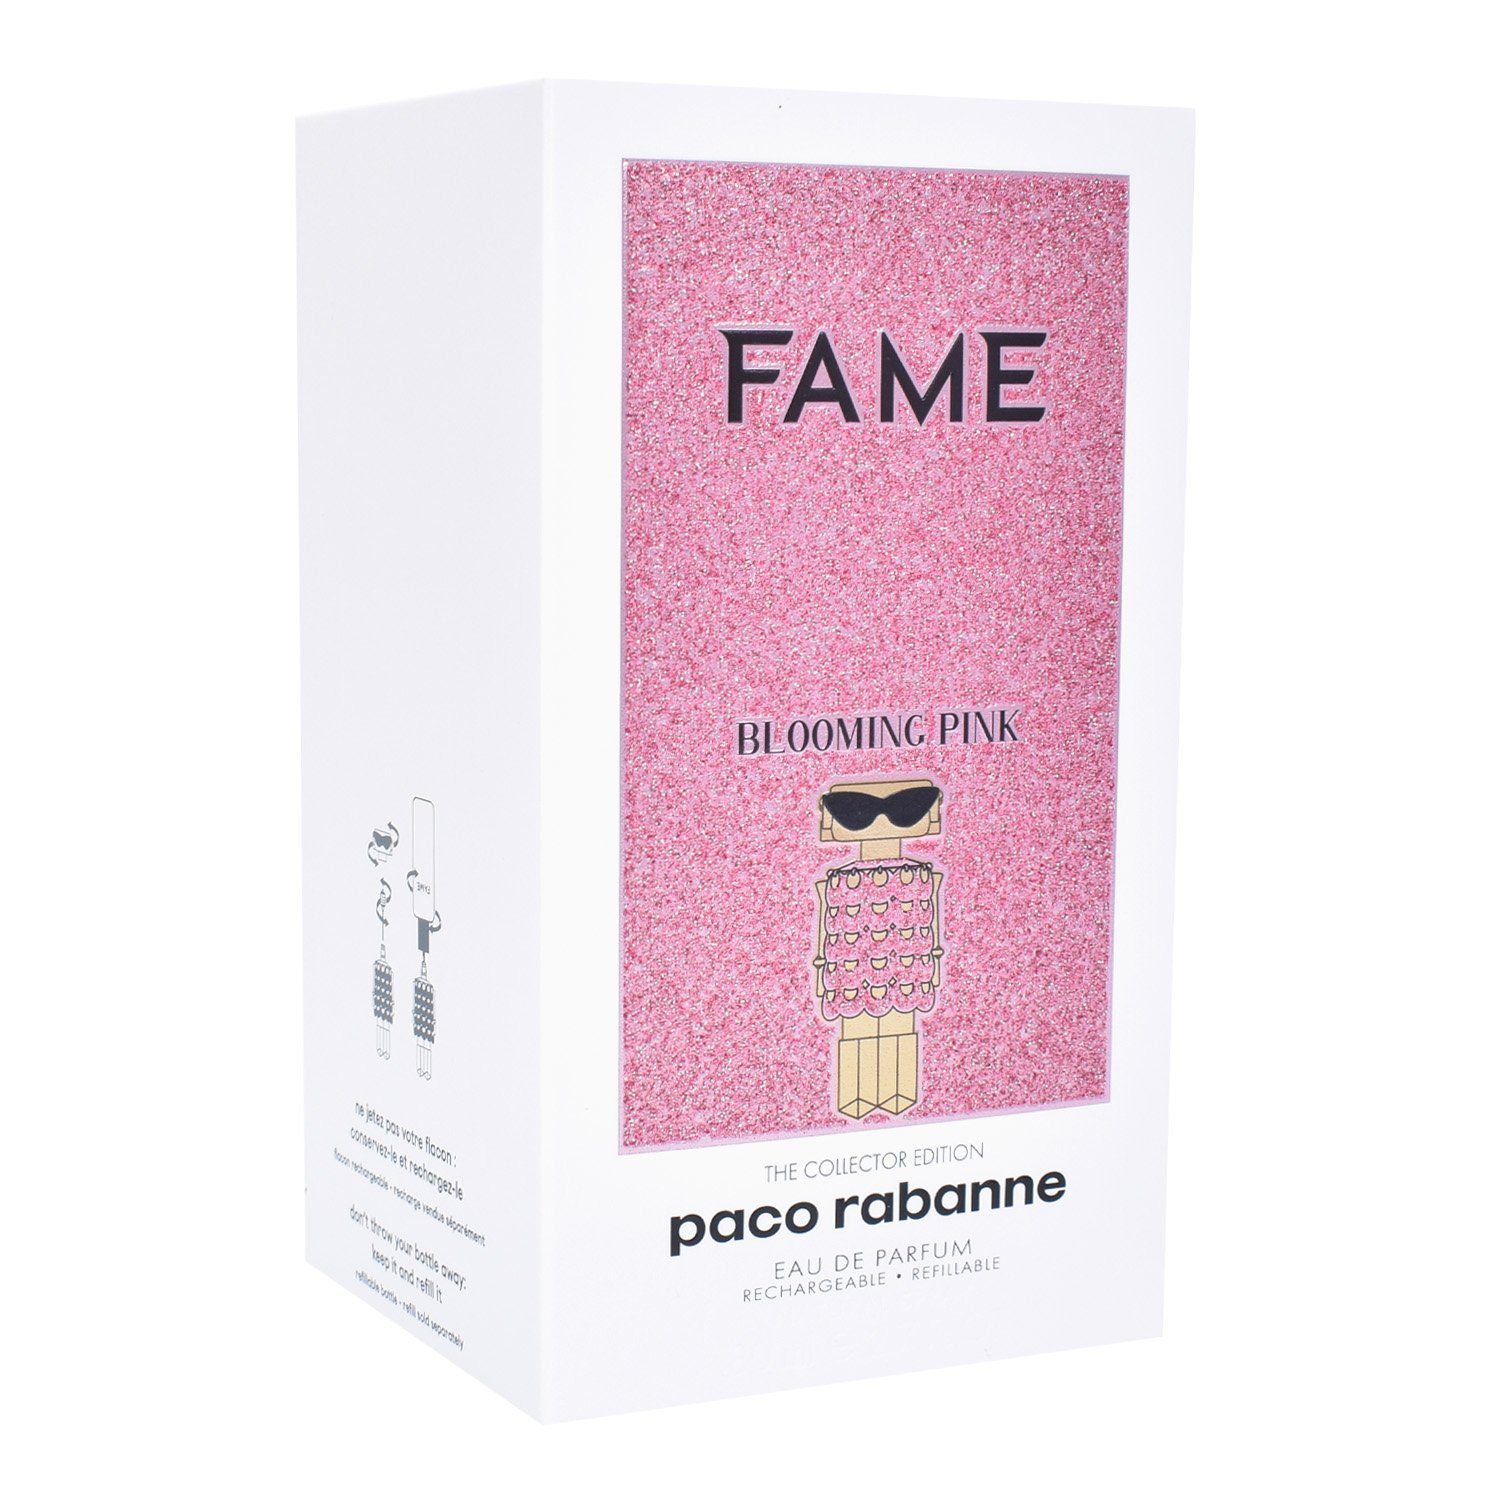 de rabanne paco Eau Fame Blooming Pink Parfum